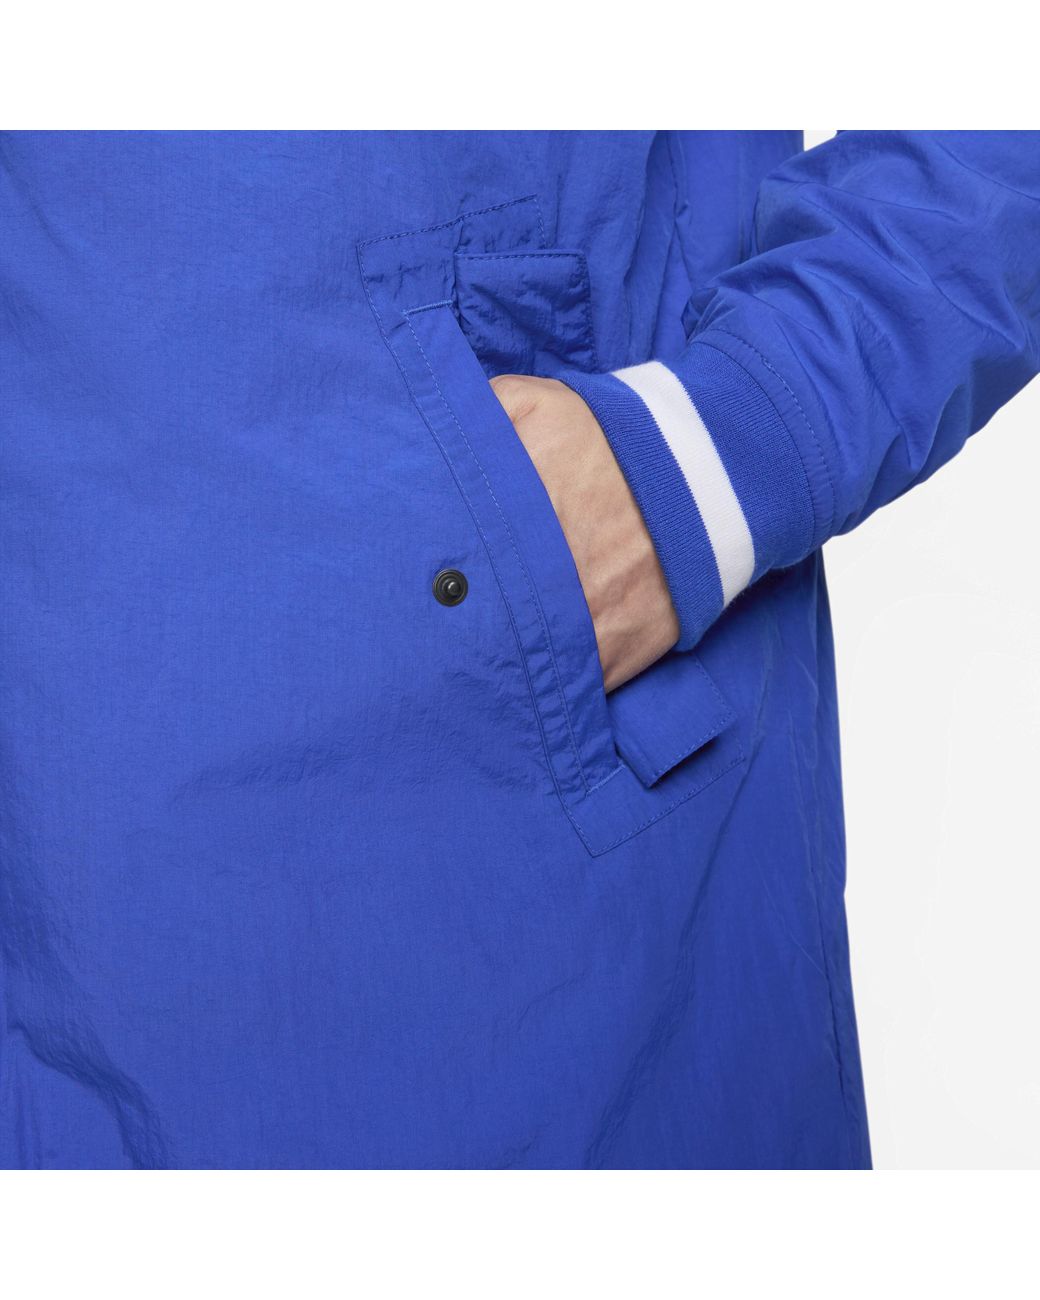 Nike Dugout Baseball Jacket In Blue, for Men | Lyst